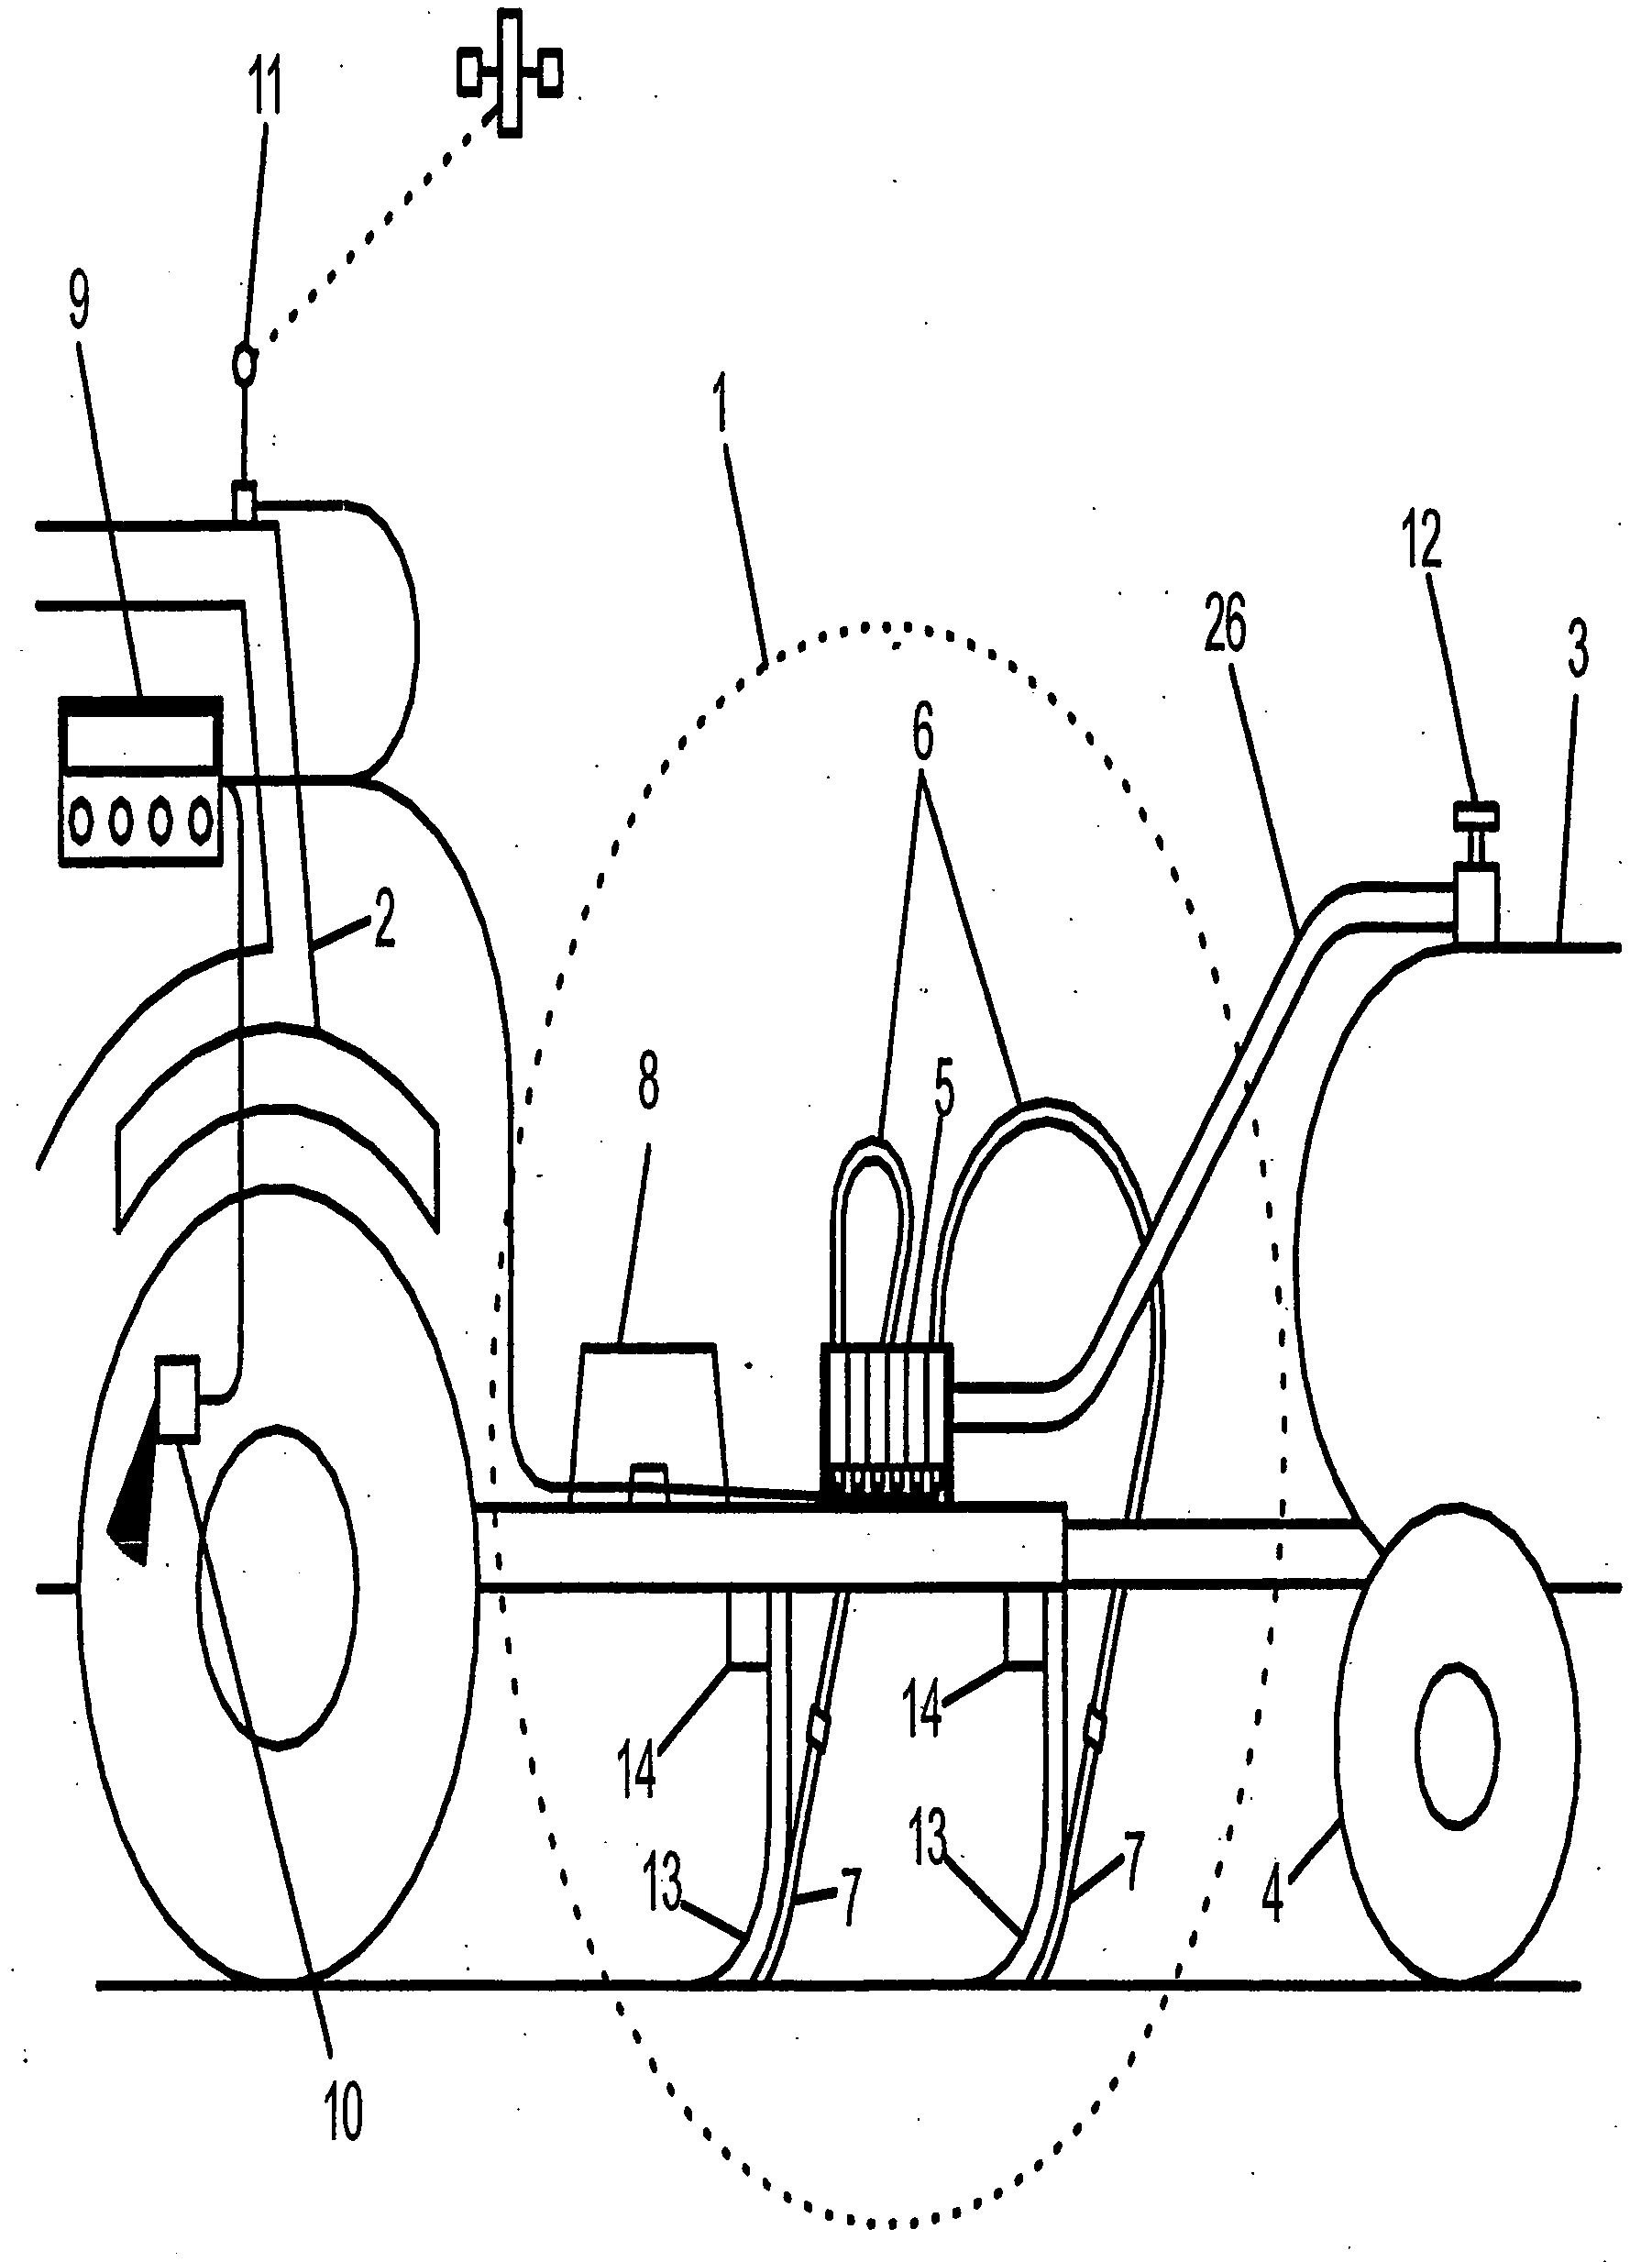 System and method for dispensing a volatile liquid fertilizer